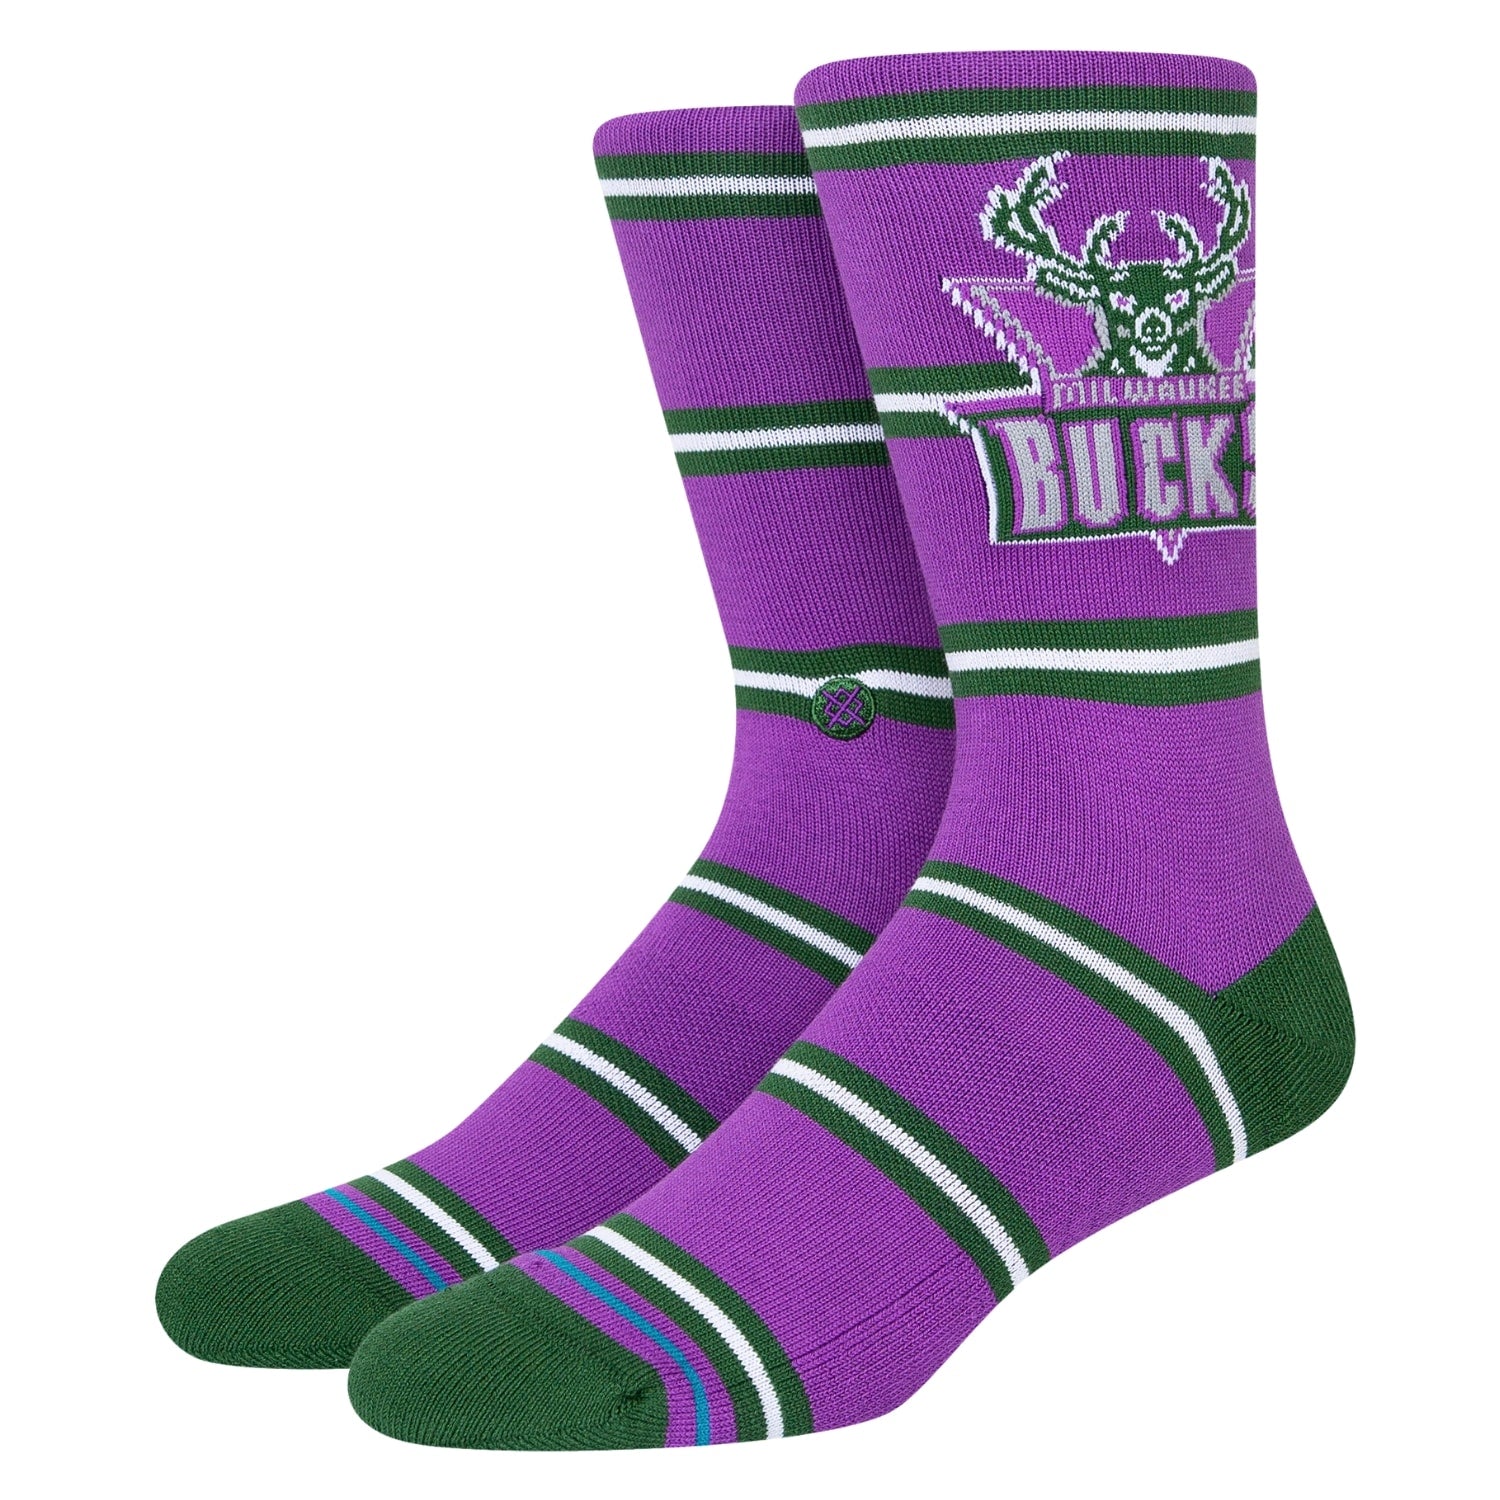 Stance Classics Bucks Socks - Purple - Mens Crew Length Socks by Stance L (UK8-12.5)